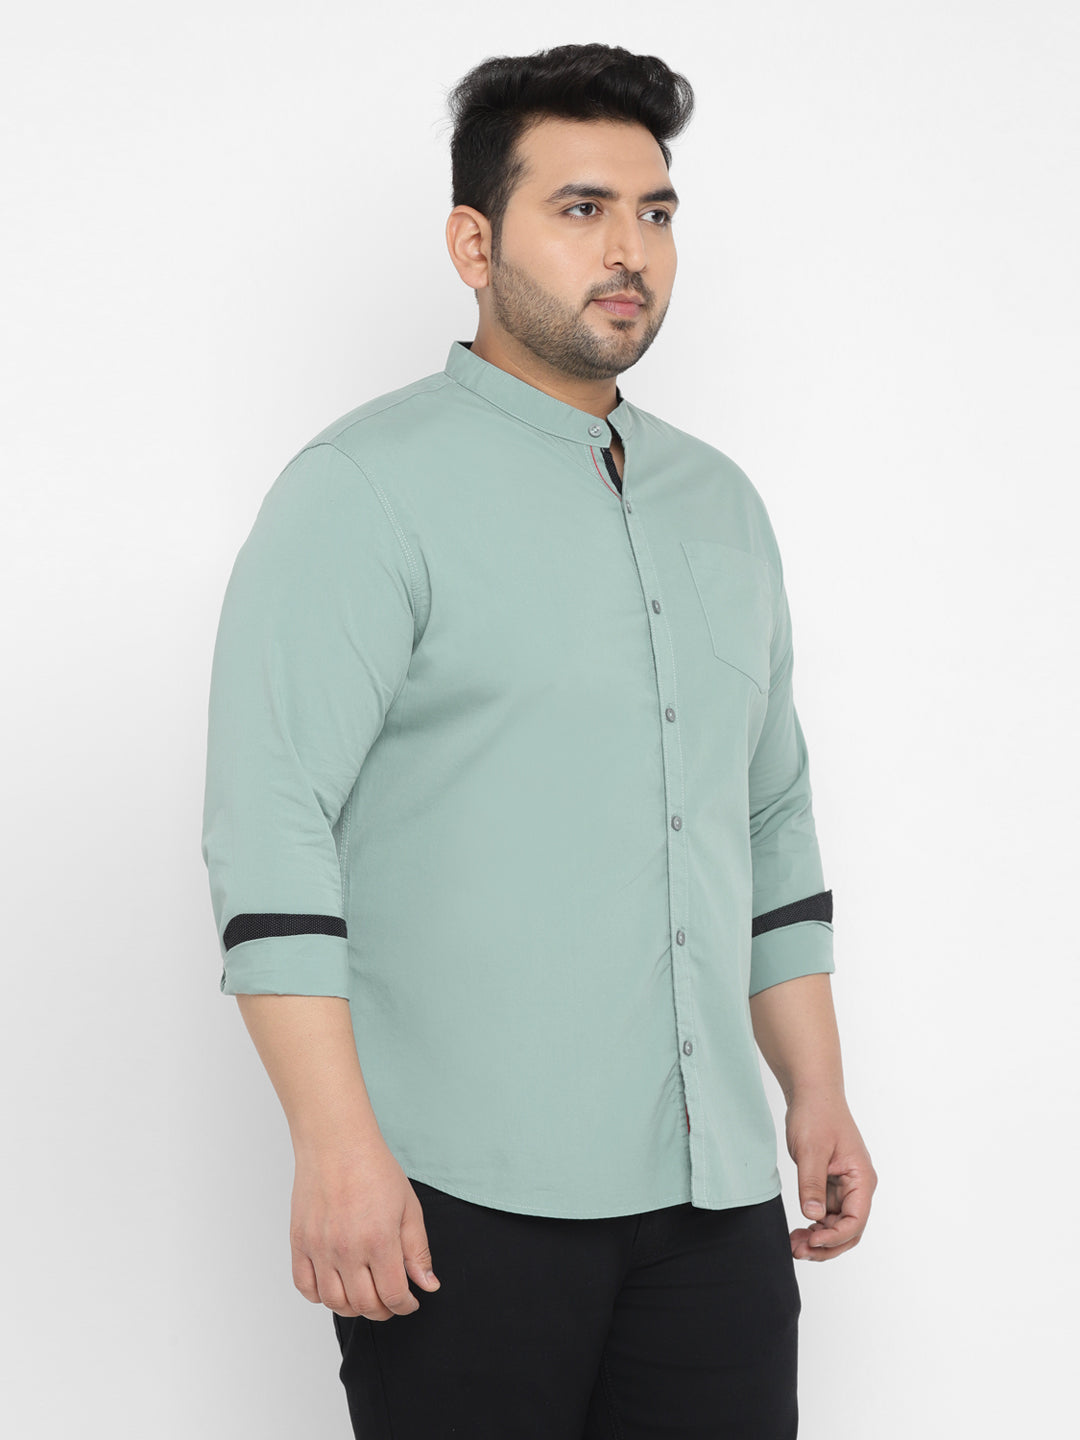 Plus Men's Blue Cotton Full Sleeve Regular Fit Casual Solid Shirt with Mandarin Collar